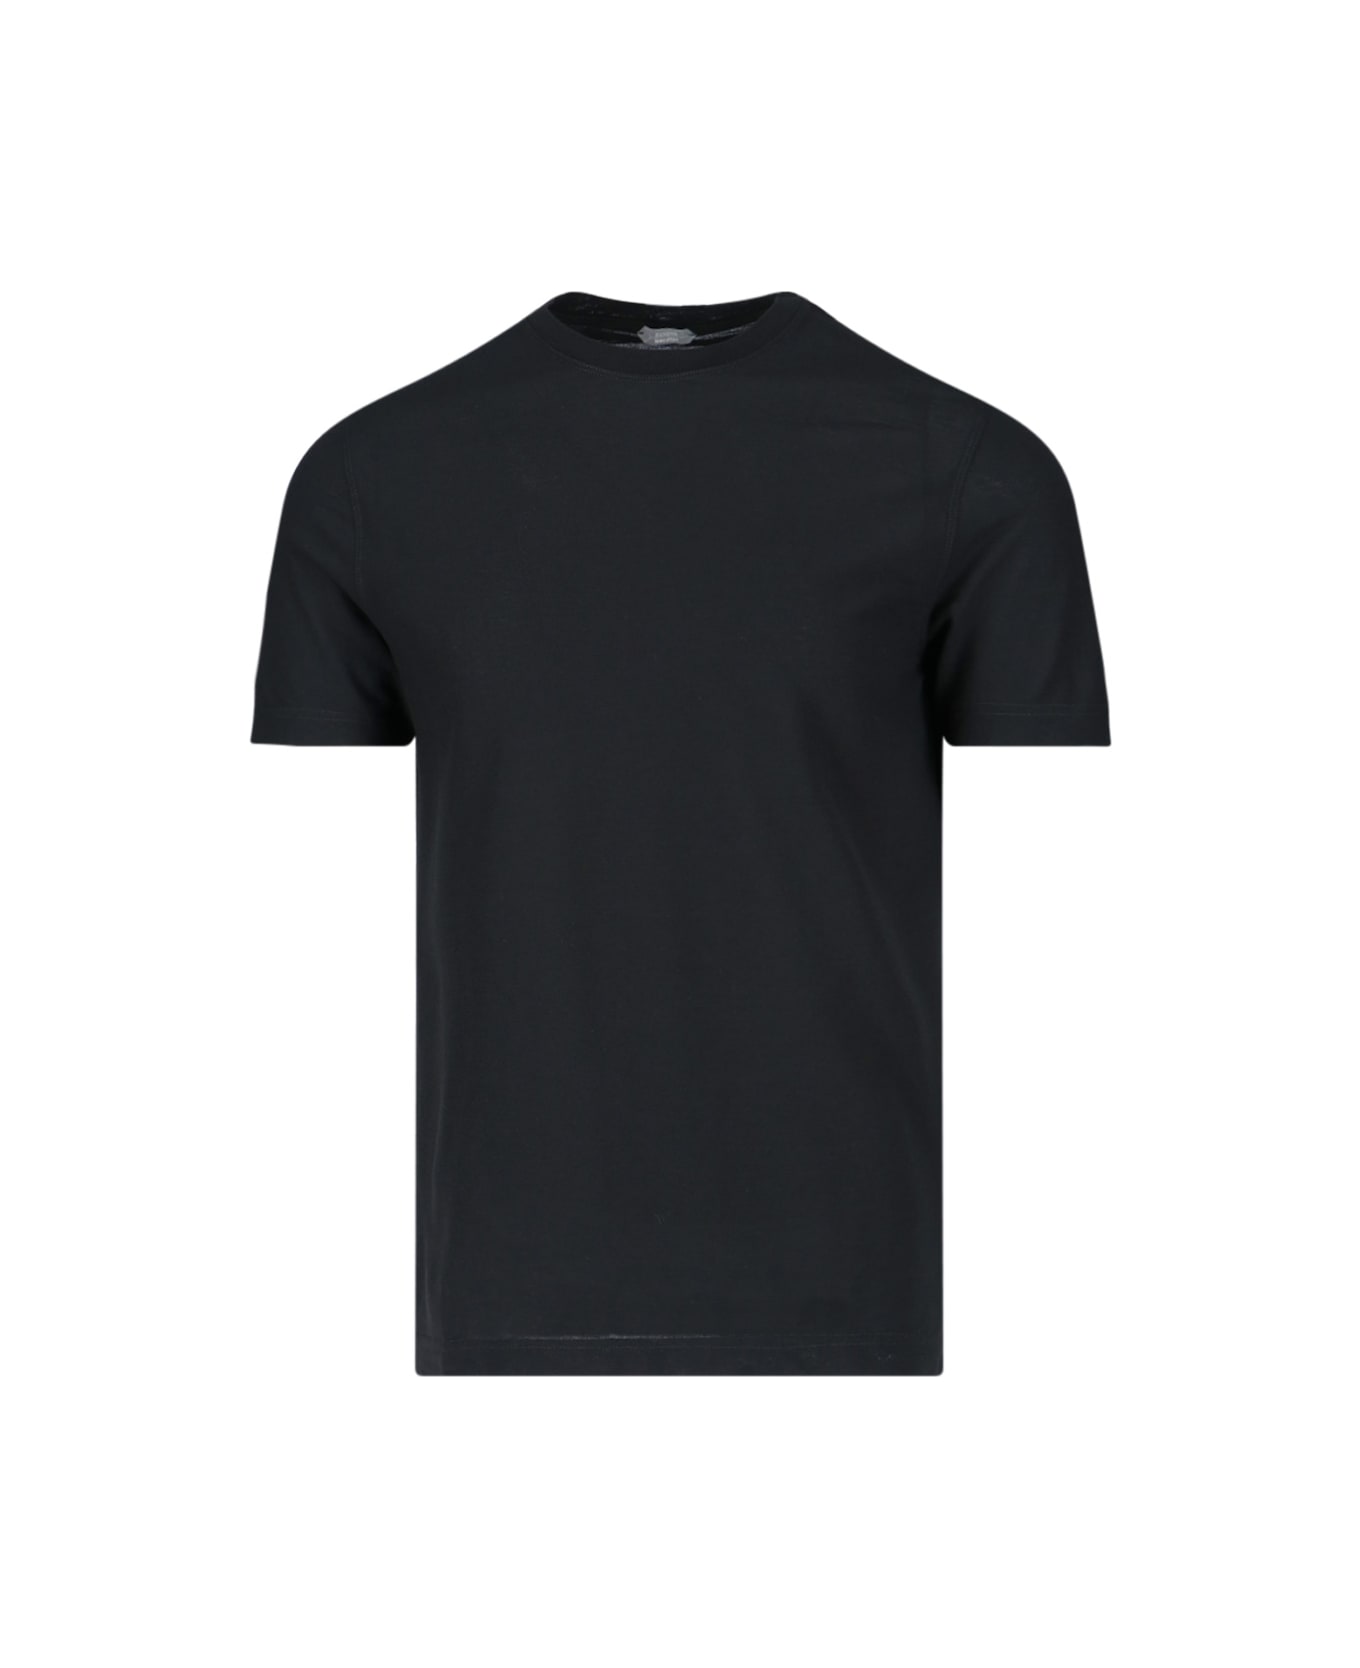 Zanone Icecotton T-shirt - Black  